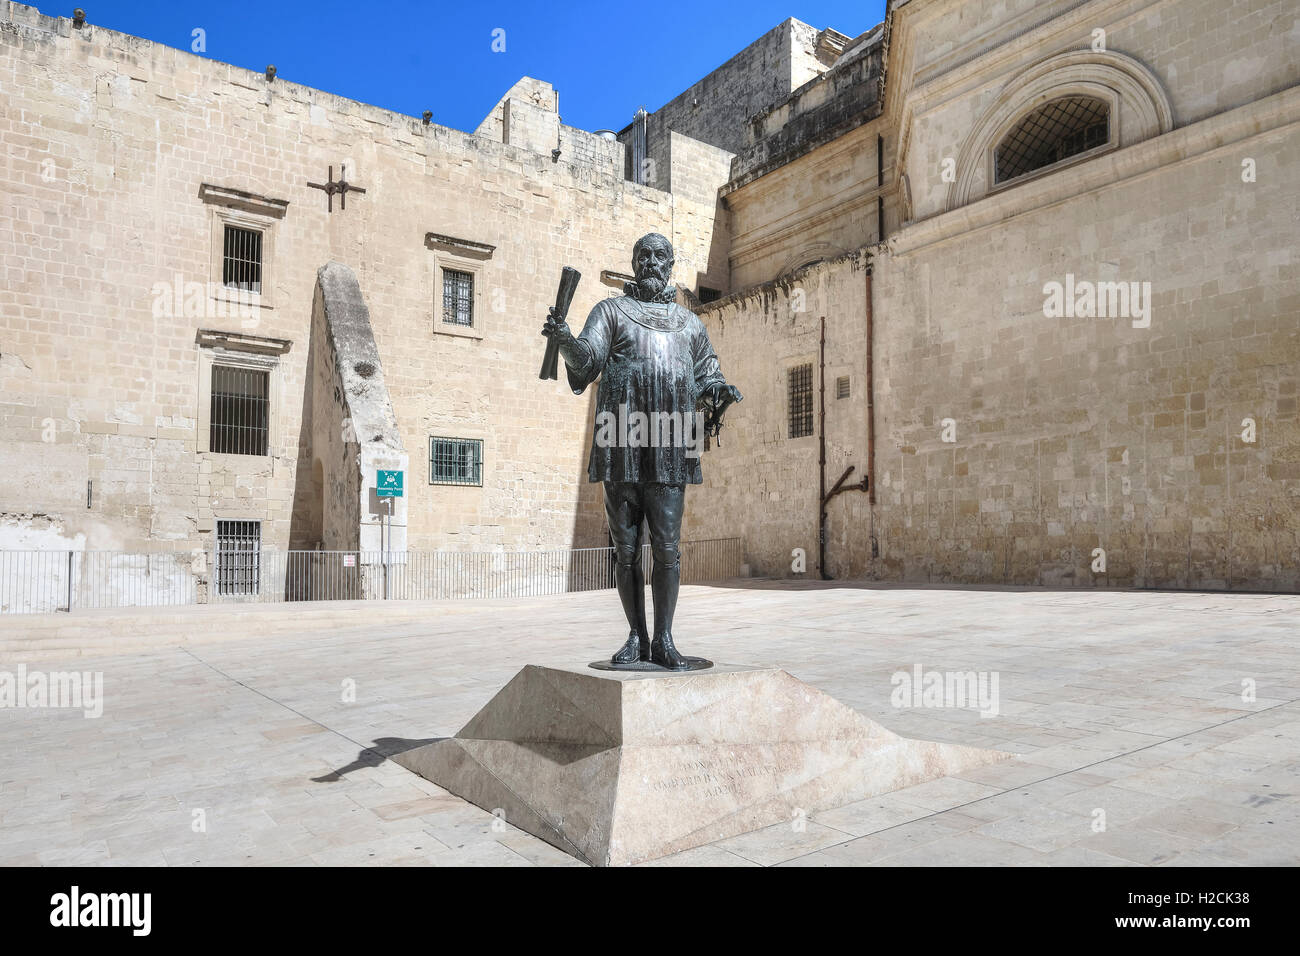 Pjazza Jean de Vallette, Valletta, Malta Stock Photo